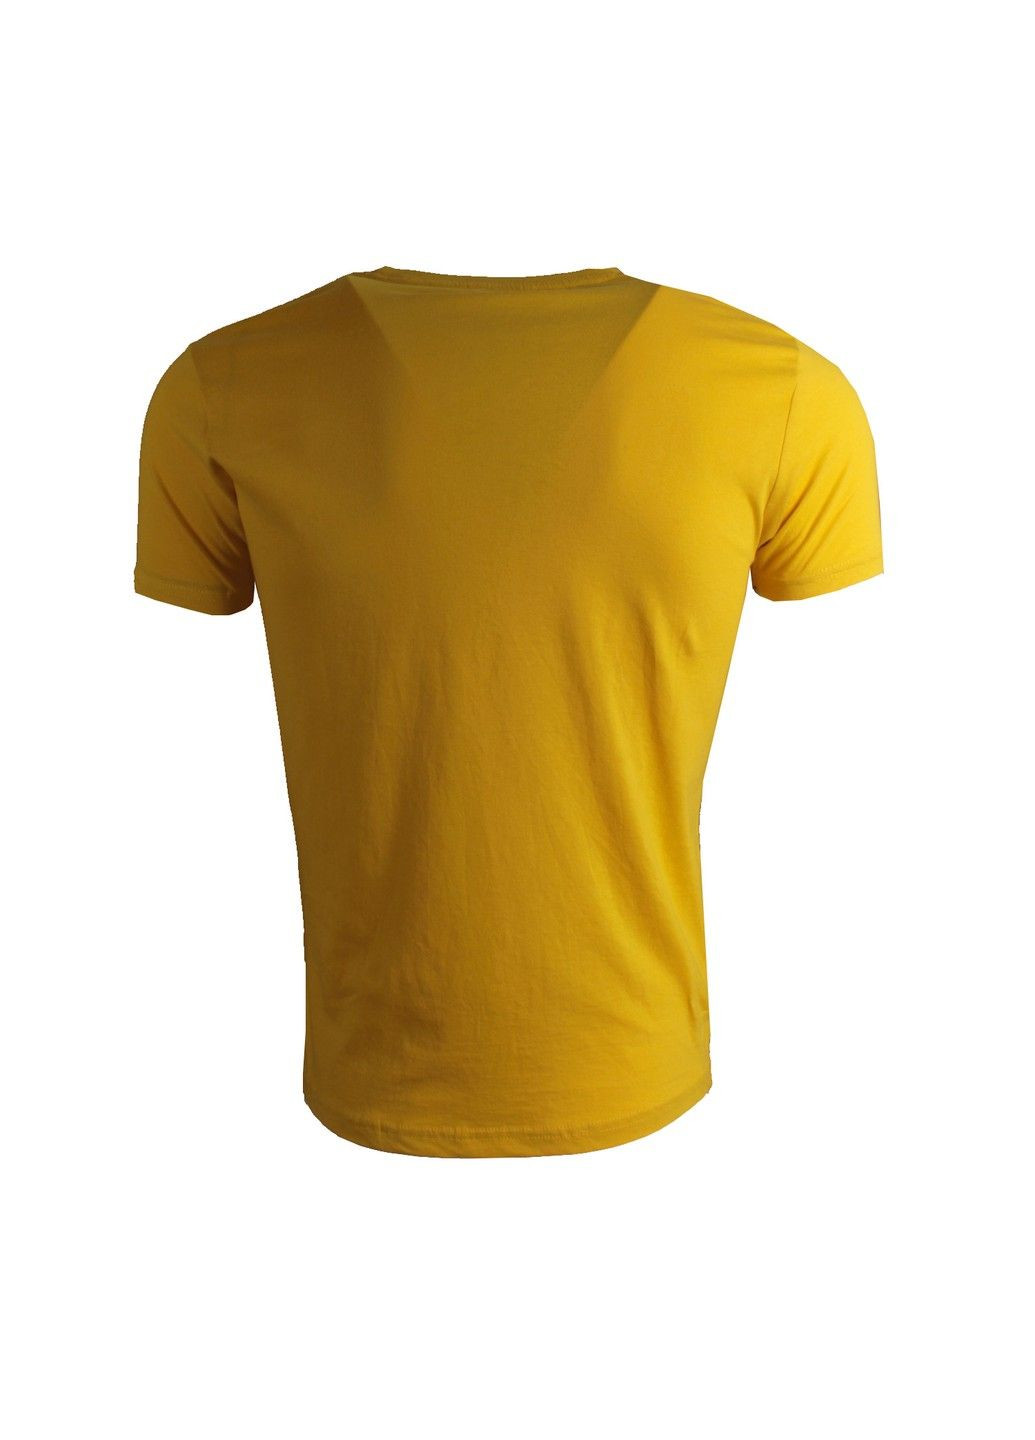 Жовта футболка чоловіча Fine Look